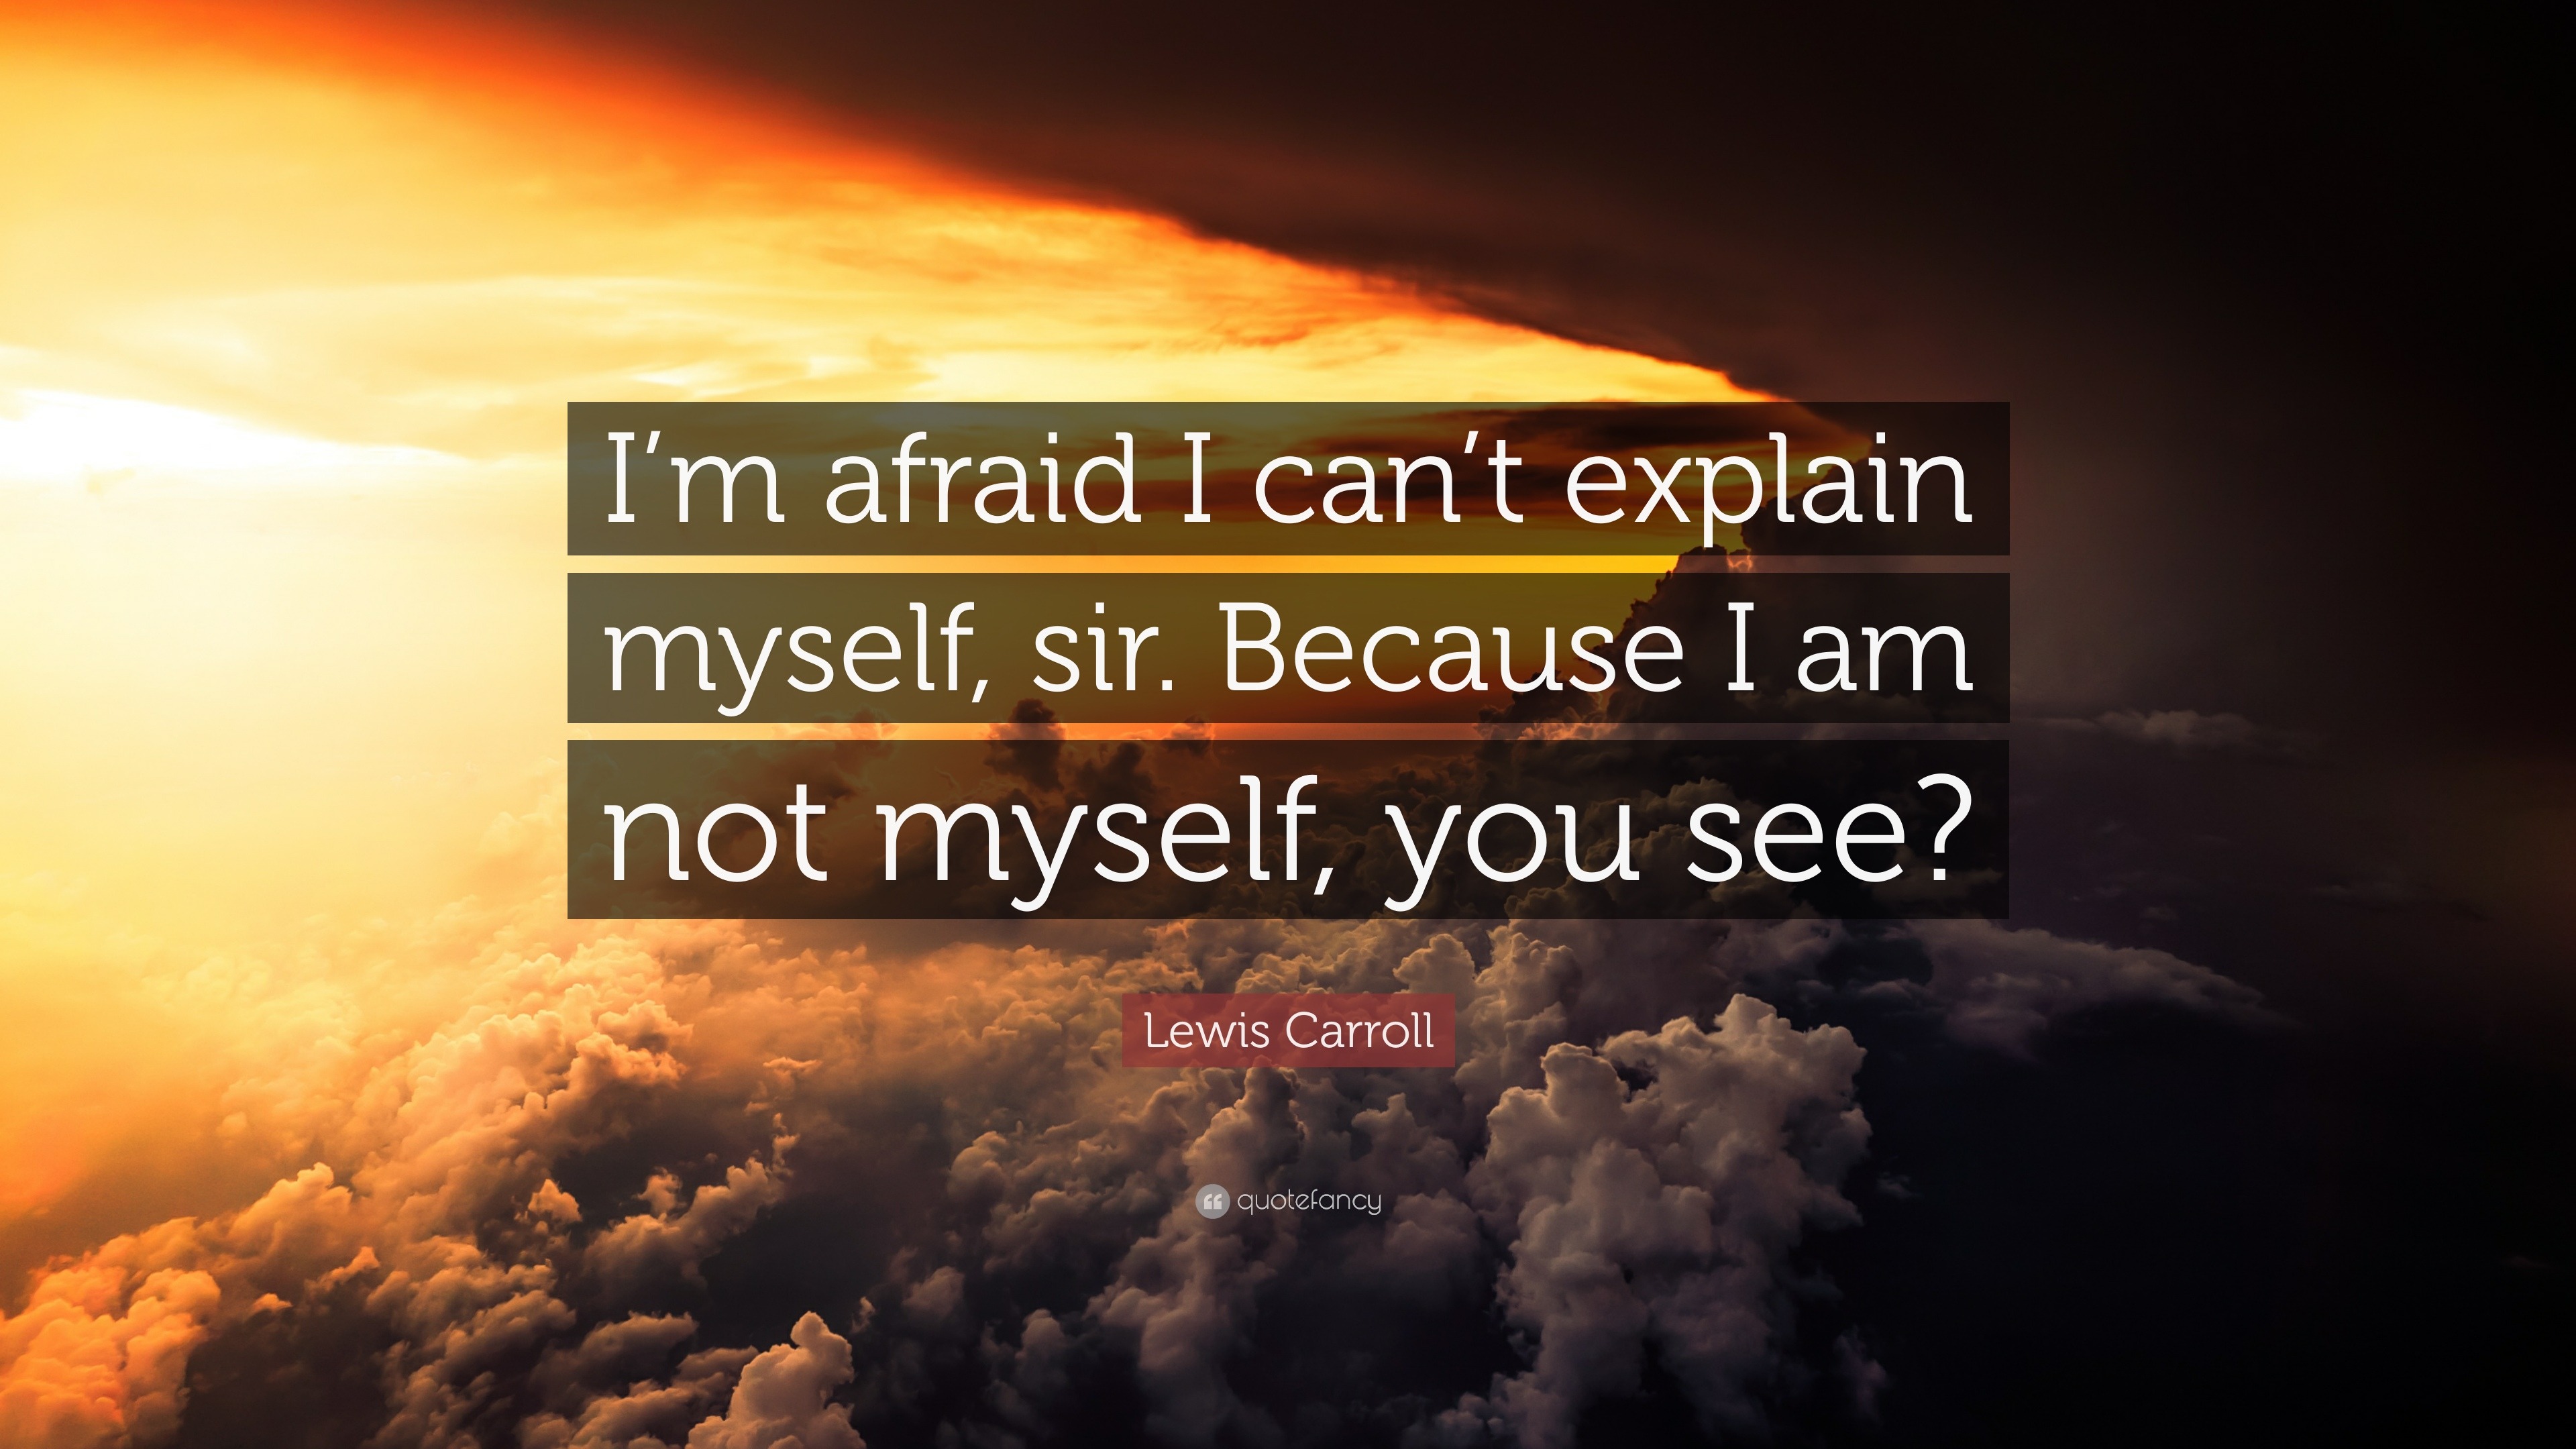 Lewis Carroll Quote: "I'm afraid I can't explain myself ...